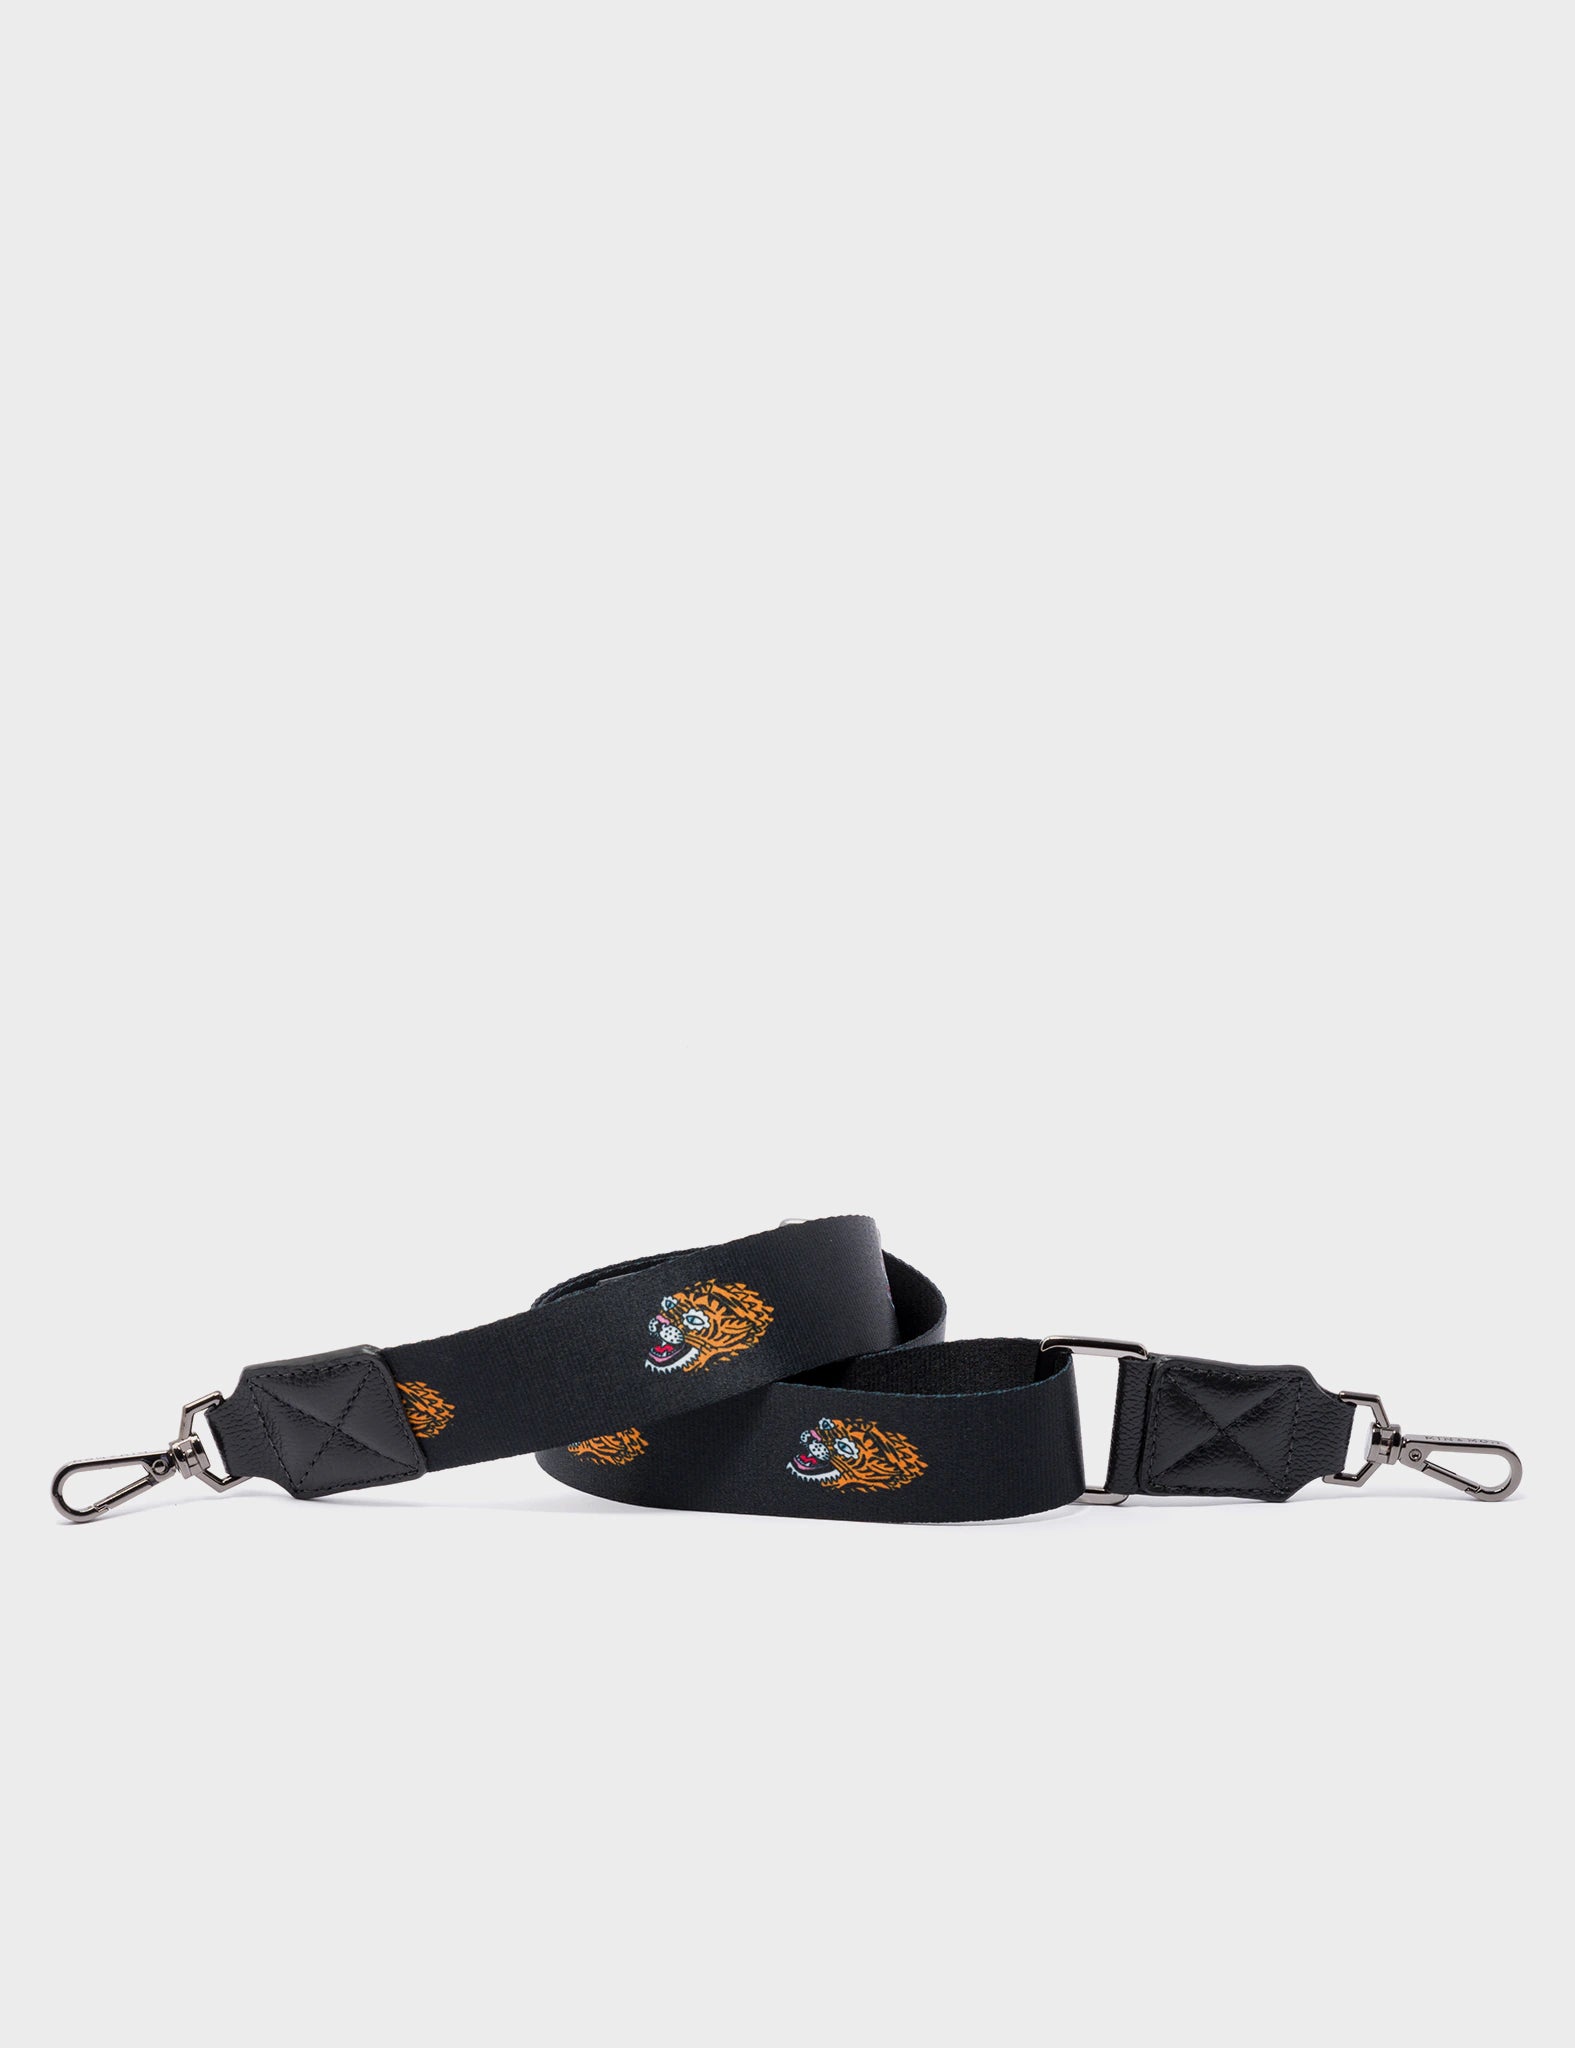 Detachable Black Nylon Strap - Blazing Tiger Design - Side